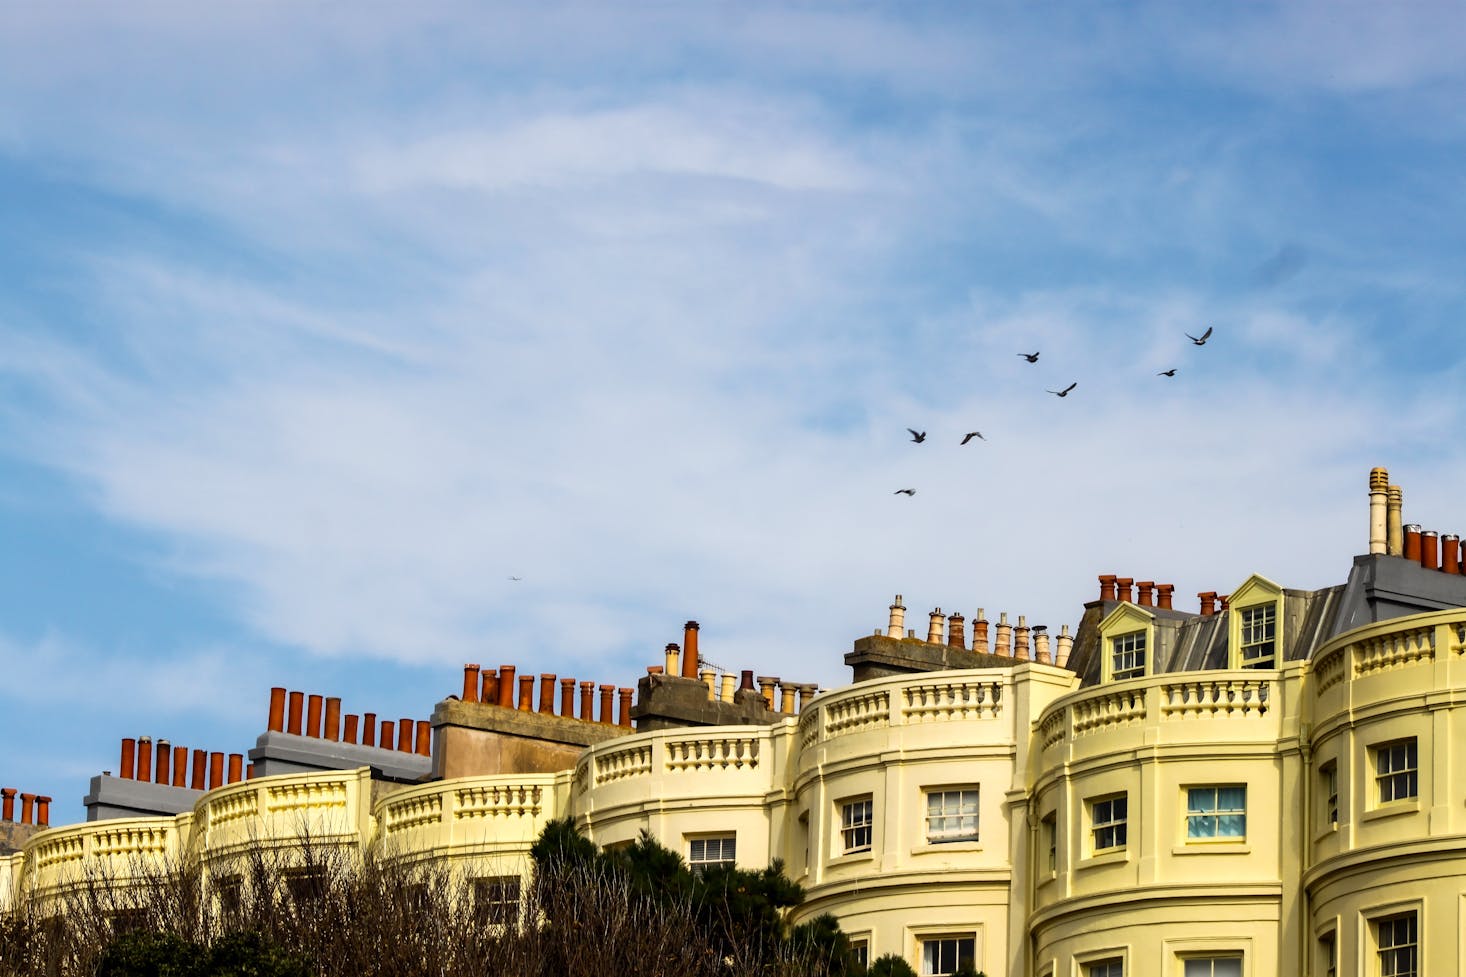 Houses in Brighton Marina